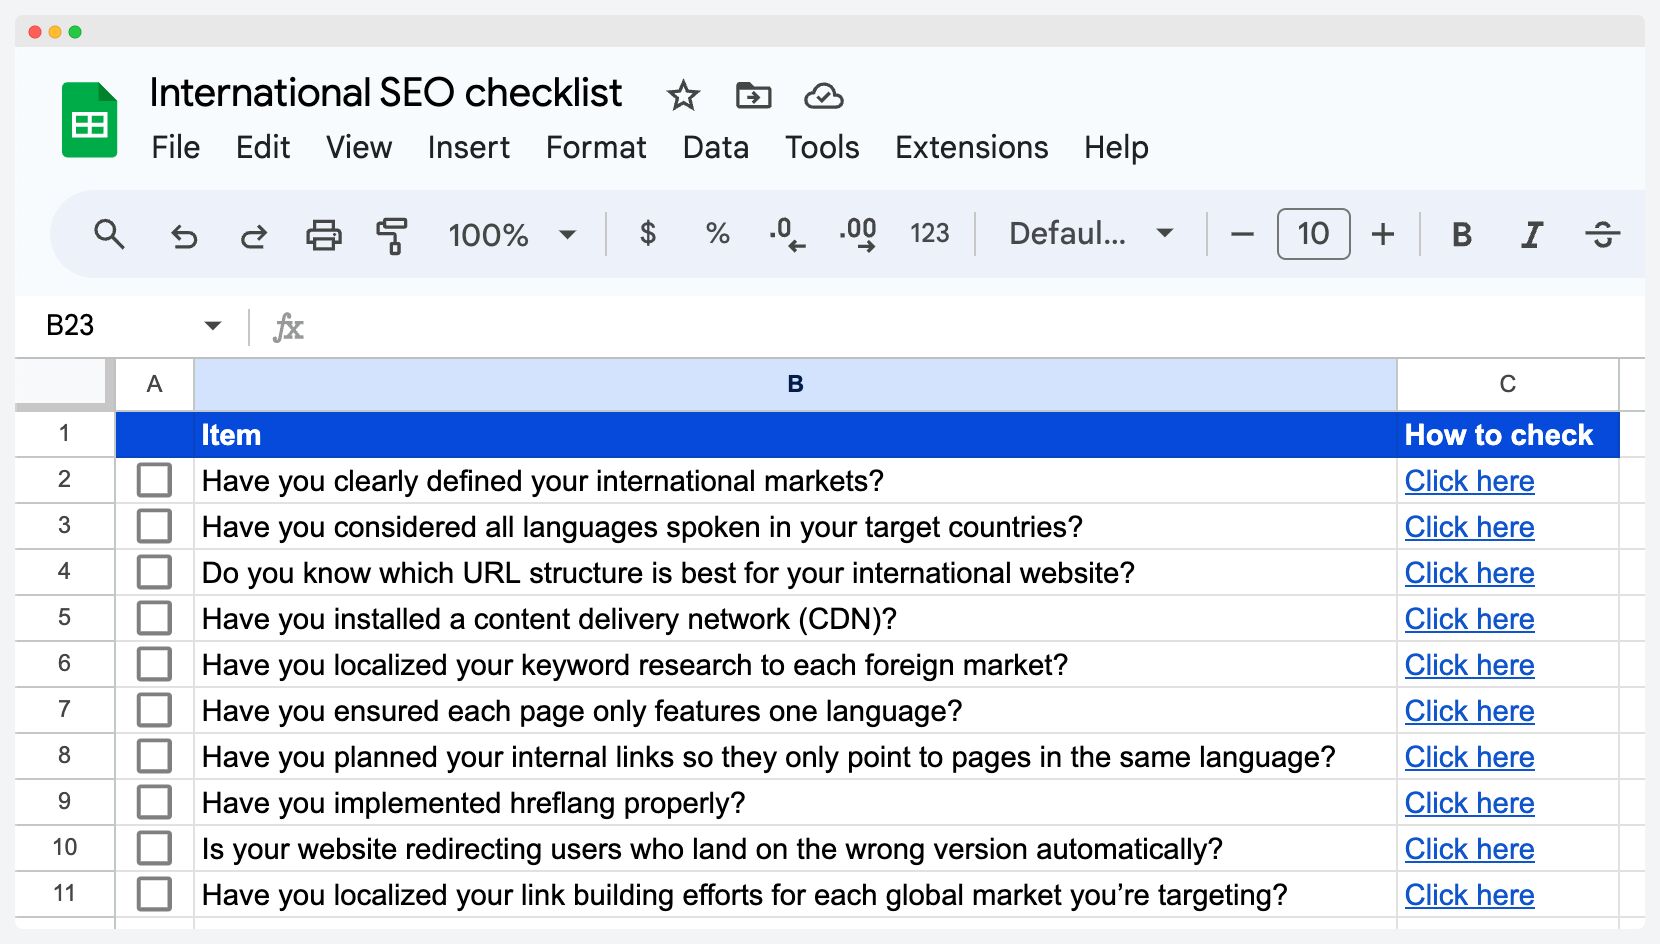 International SEO checklist in Google Sheets